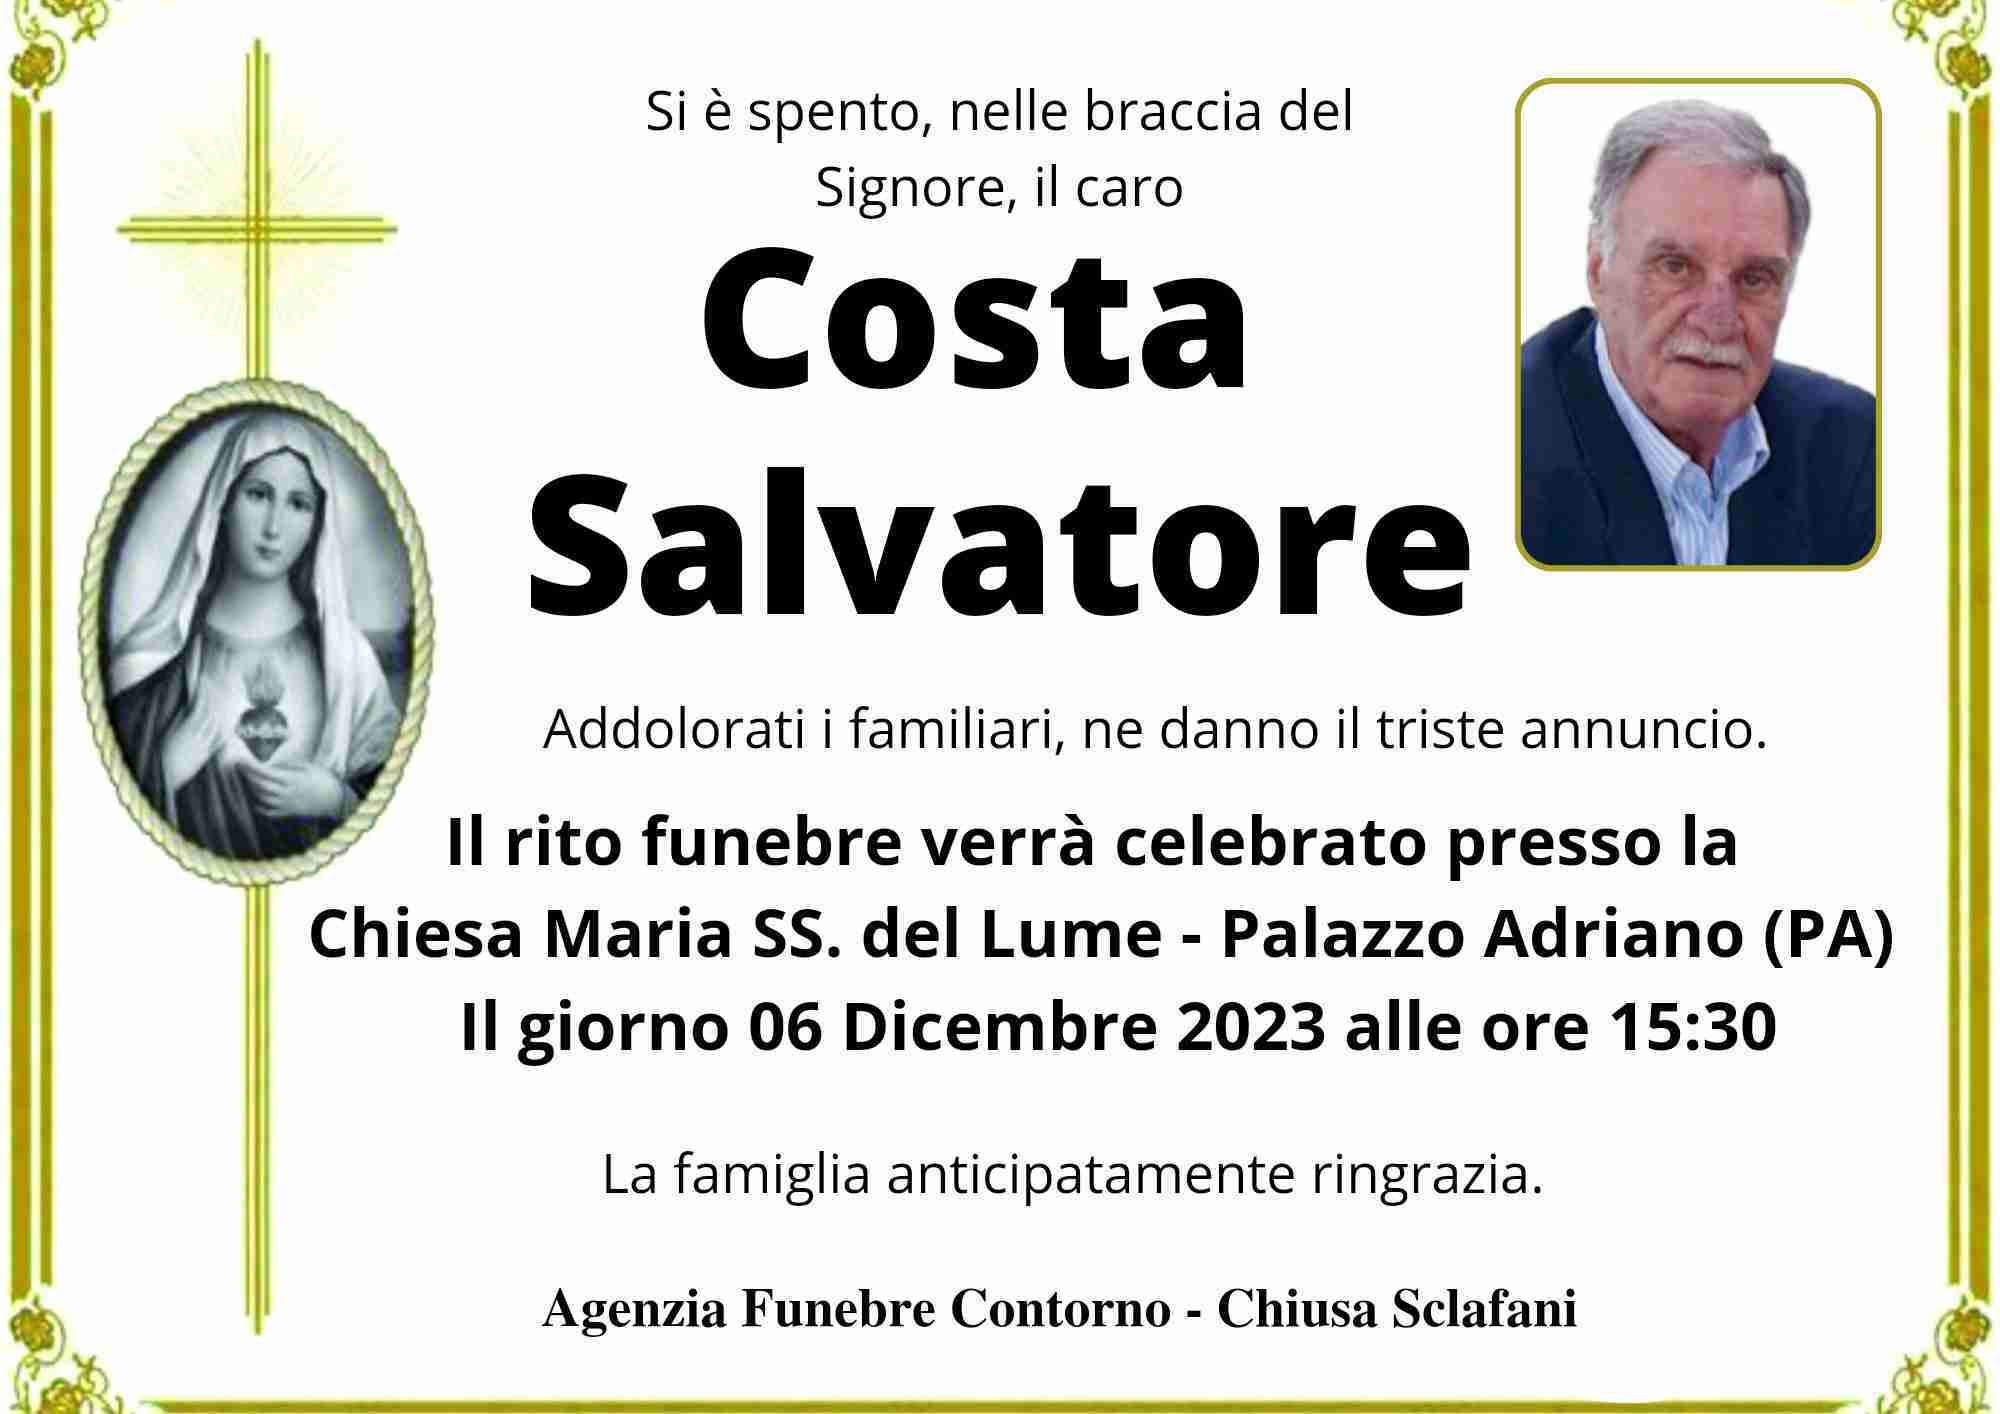 Salvatore Costa